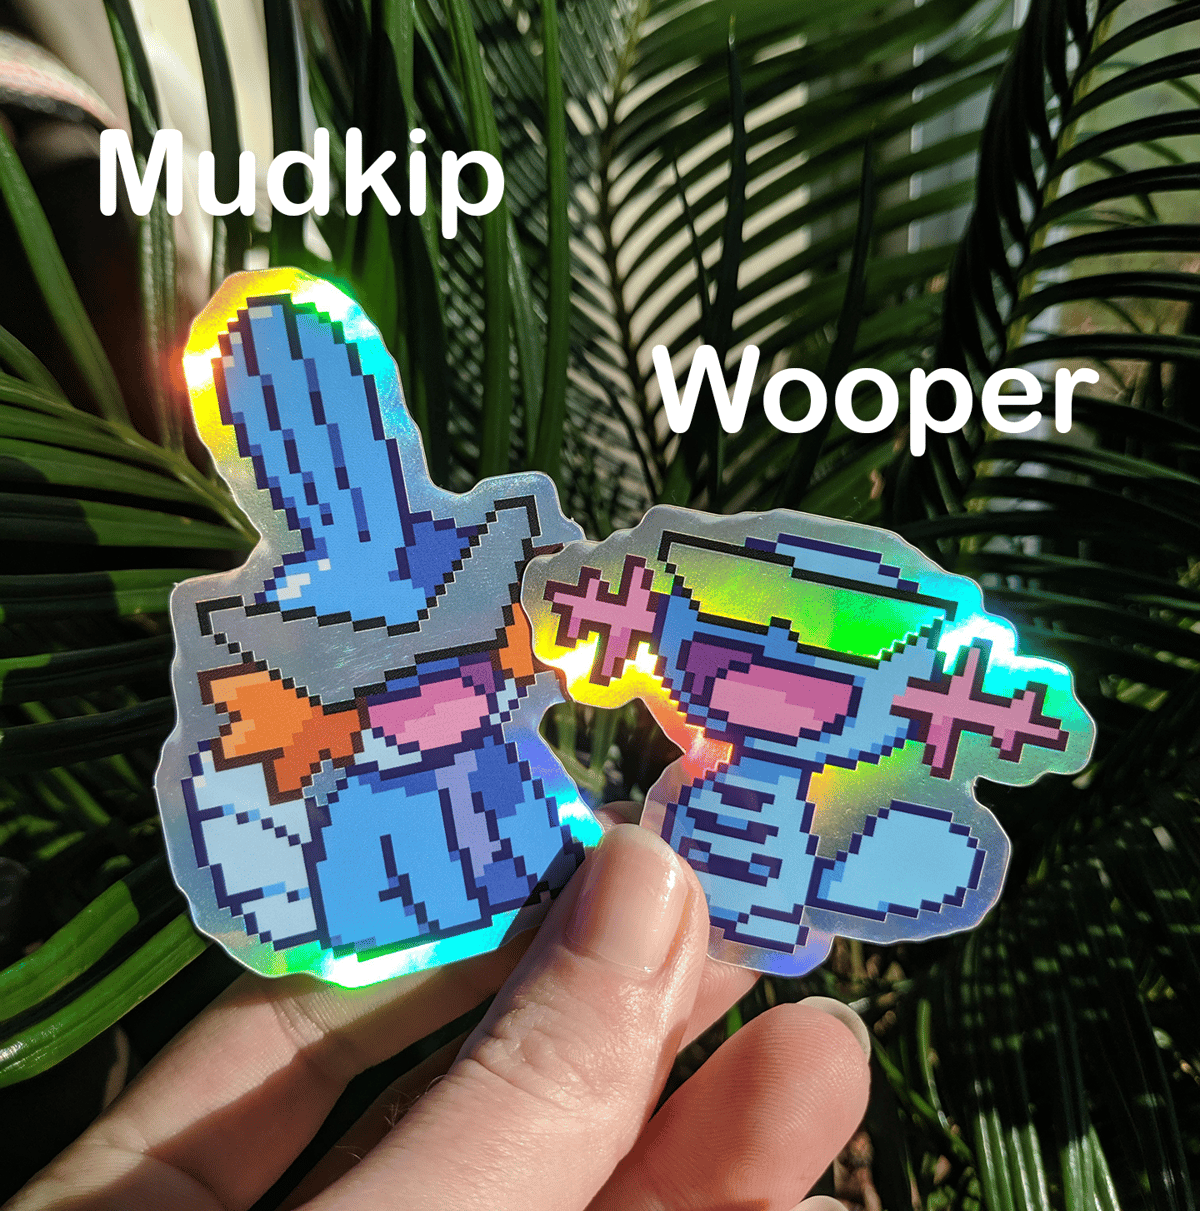 Holographic Poke Stickers - (Mudkip + Wooper)